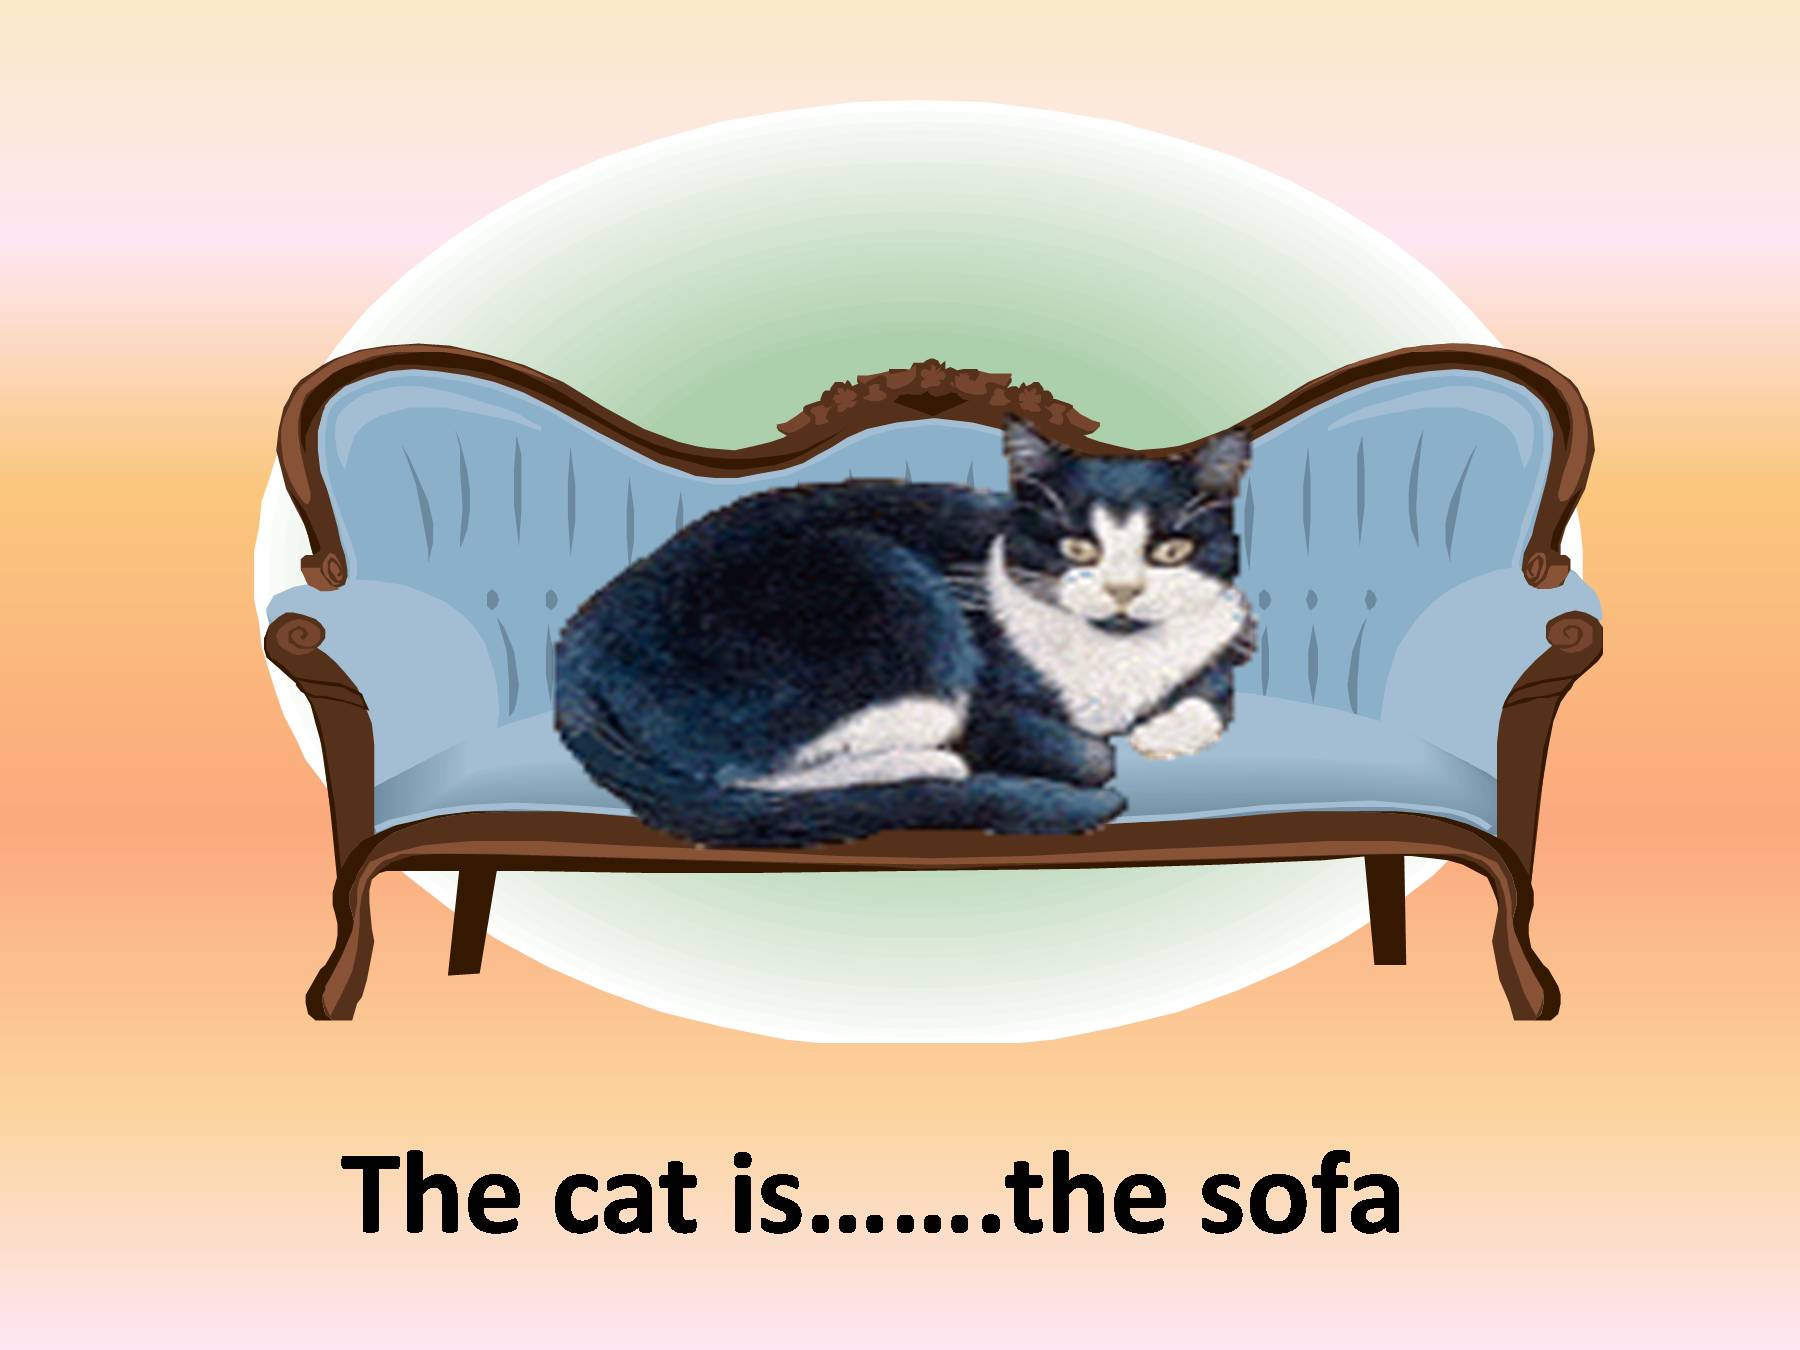 Next to the sofa. Cat on предлог. Предлоги в картинках. Cat is on the Sofa. Under картинка.